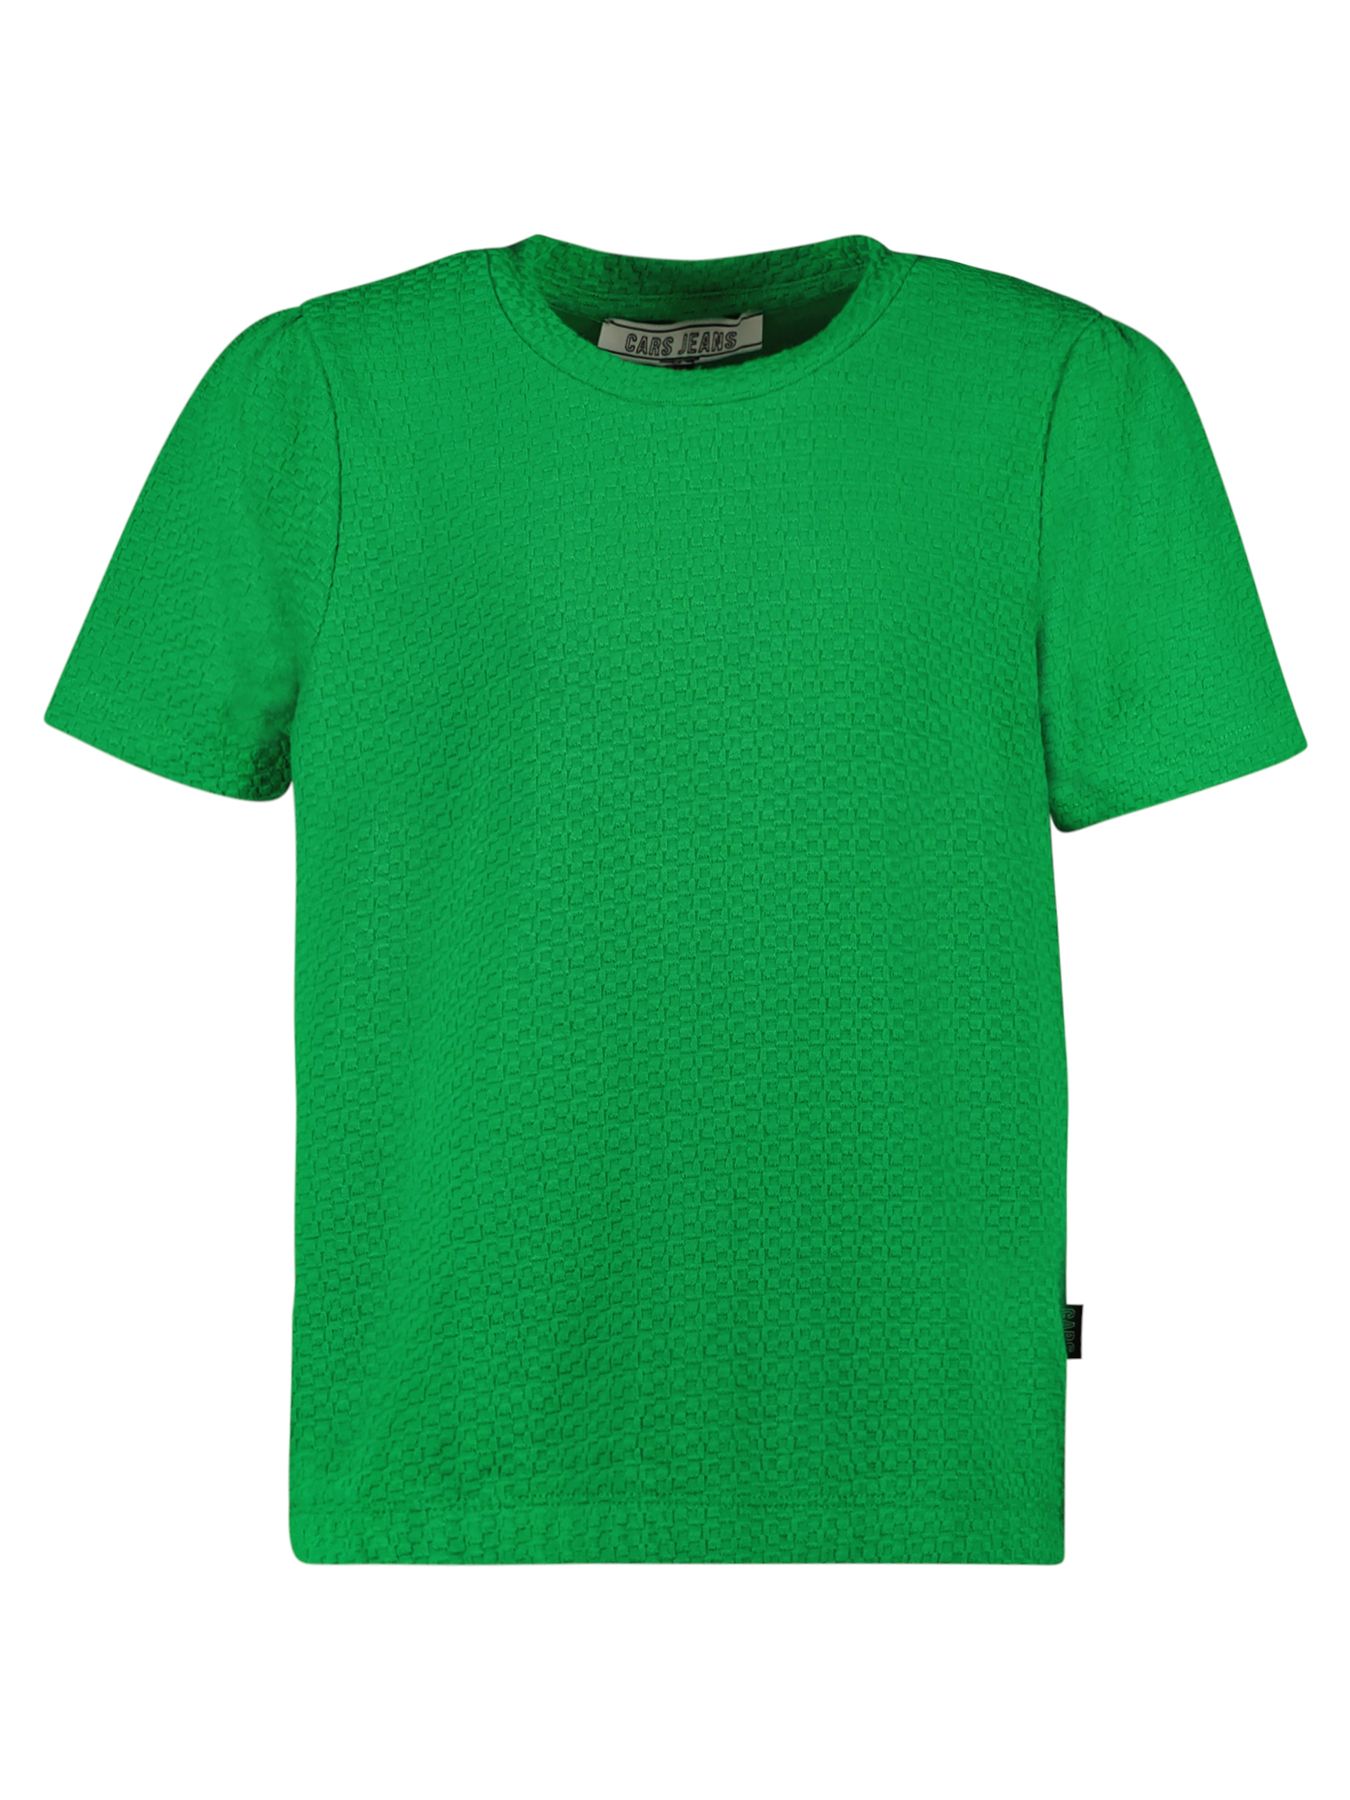 Cars Meisjes T-shirt Zosa Jr. 55 green 00107511-EKA03000200000033